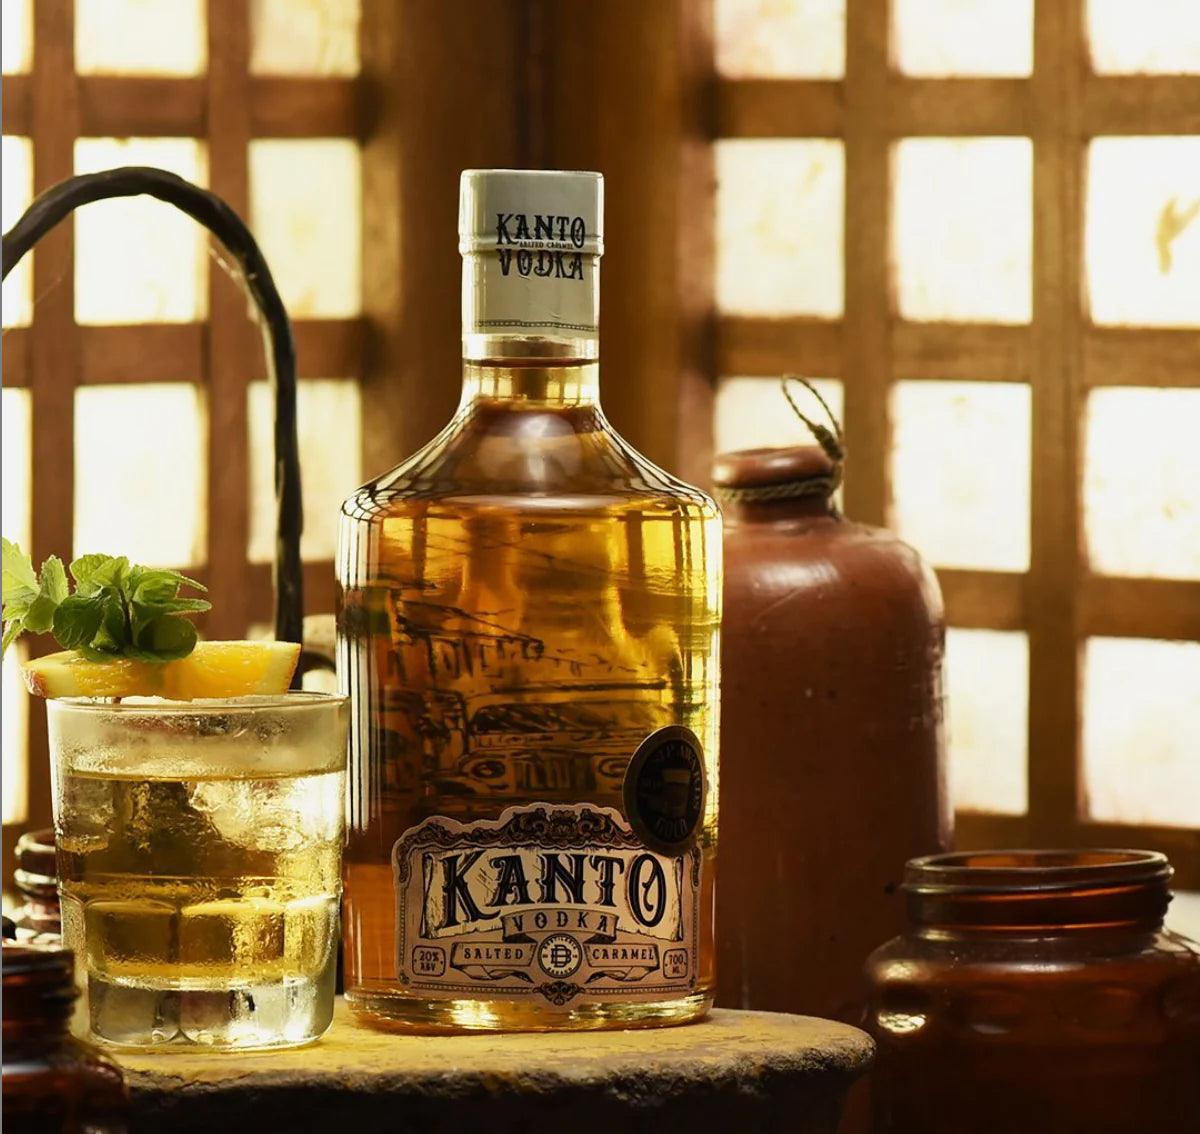 Kanto - salted caramel Vodka | 20% Vol. | Topspirits